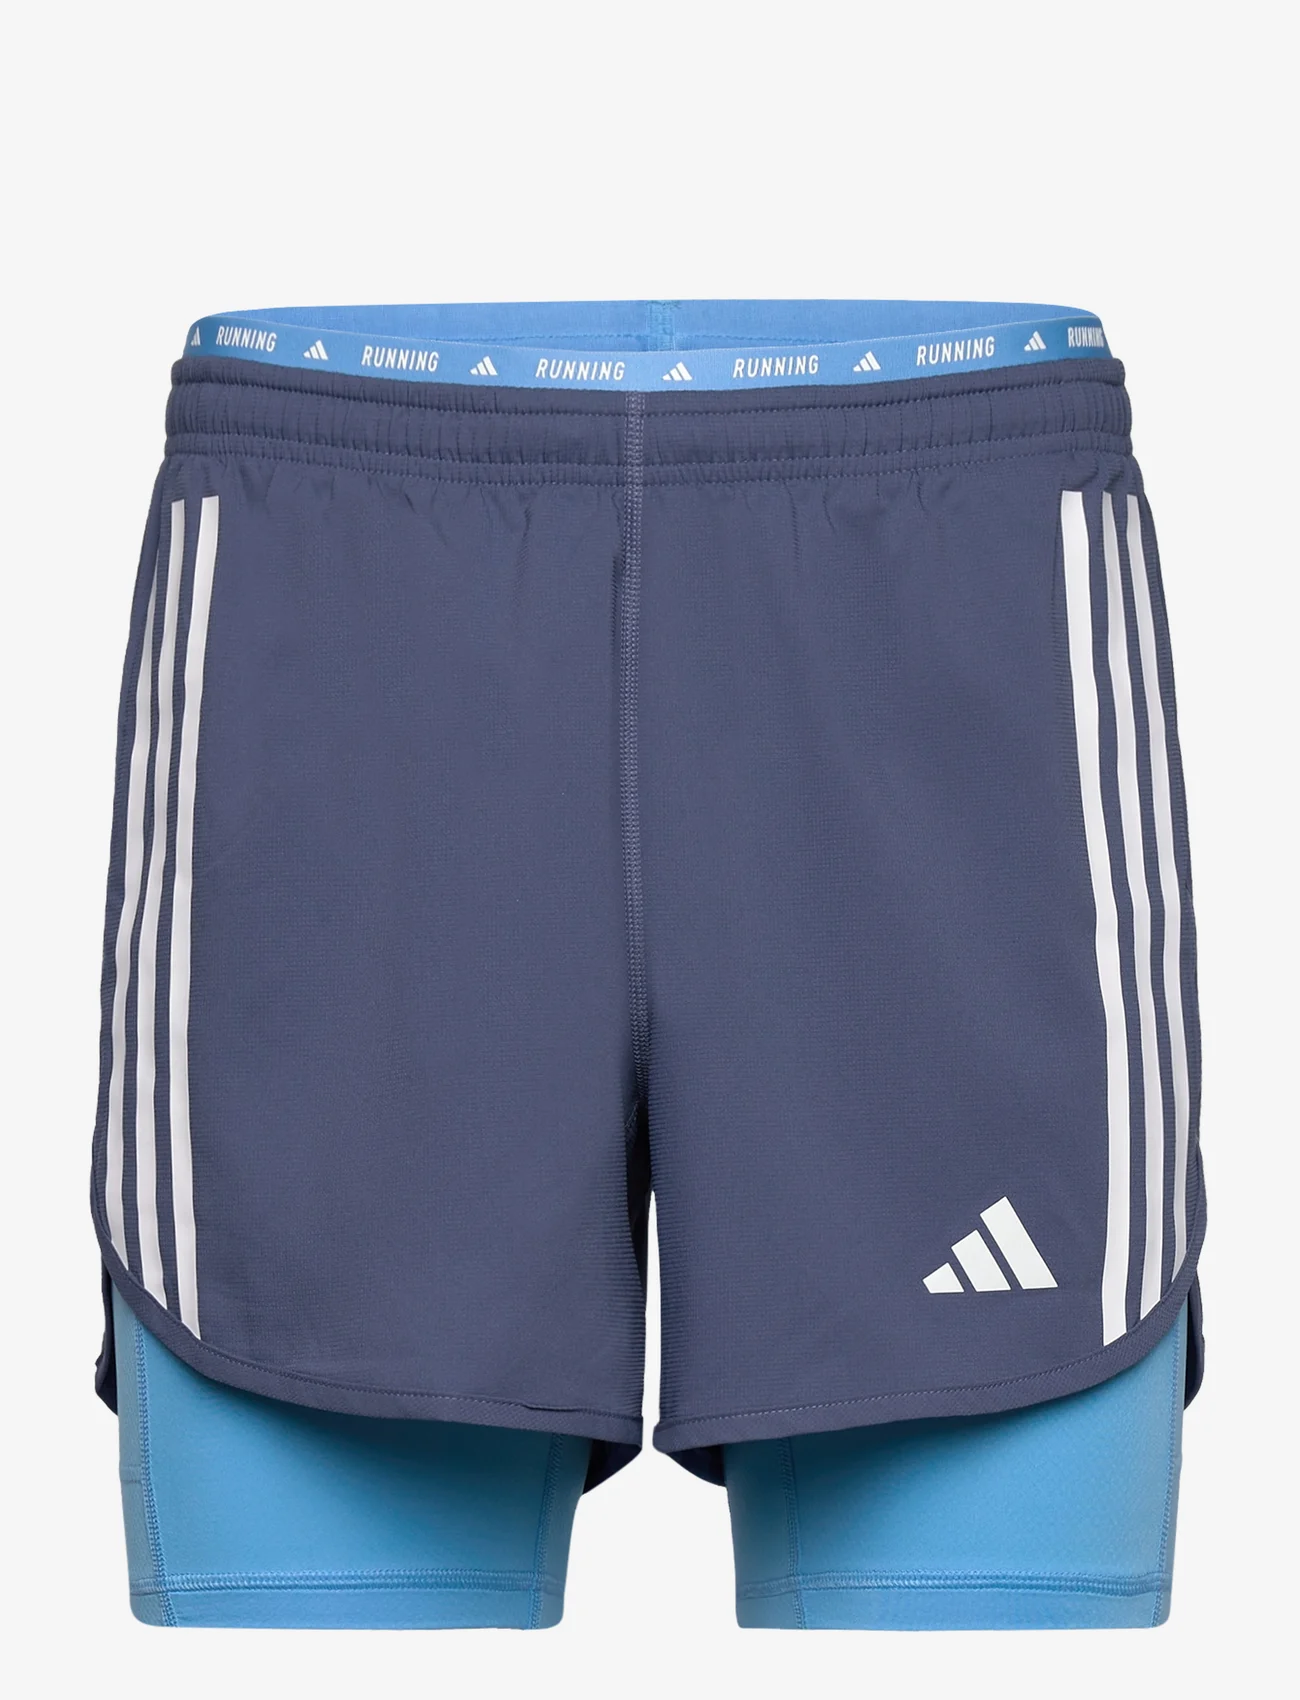 adidas Performance - OTR E 3S 2in1 S - sports shorts - prloin - 0